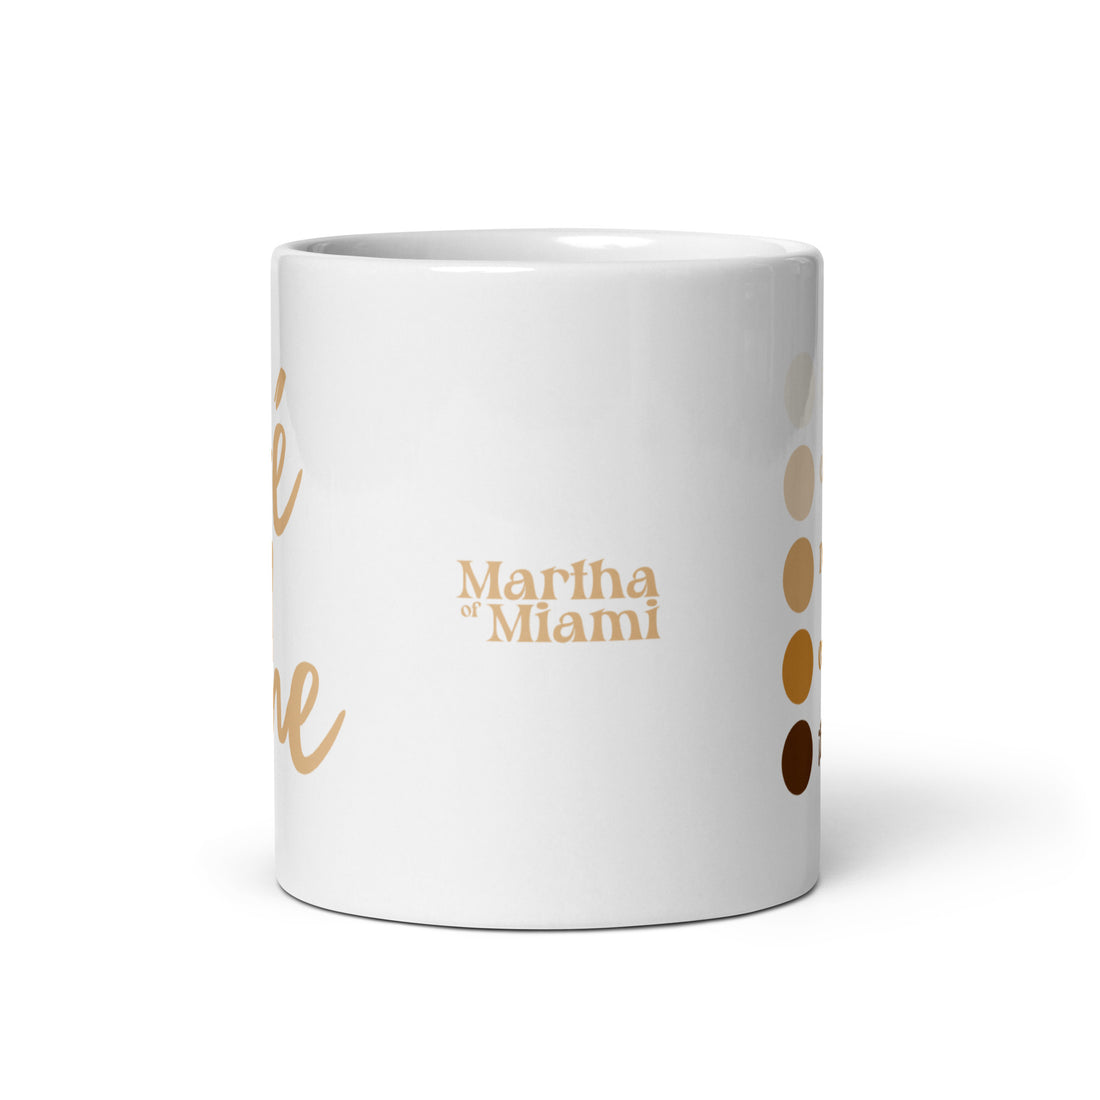 Cafe con leche white mug from Martha of Miami